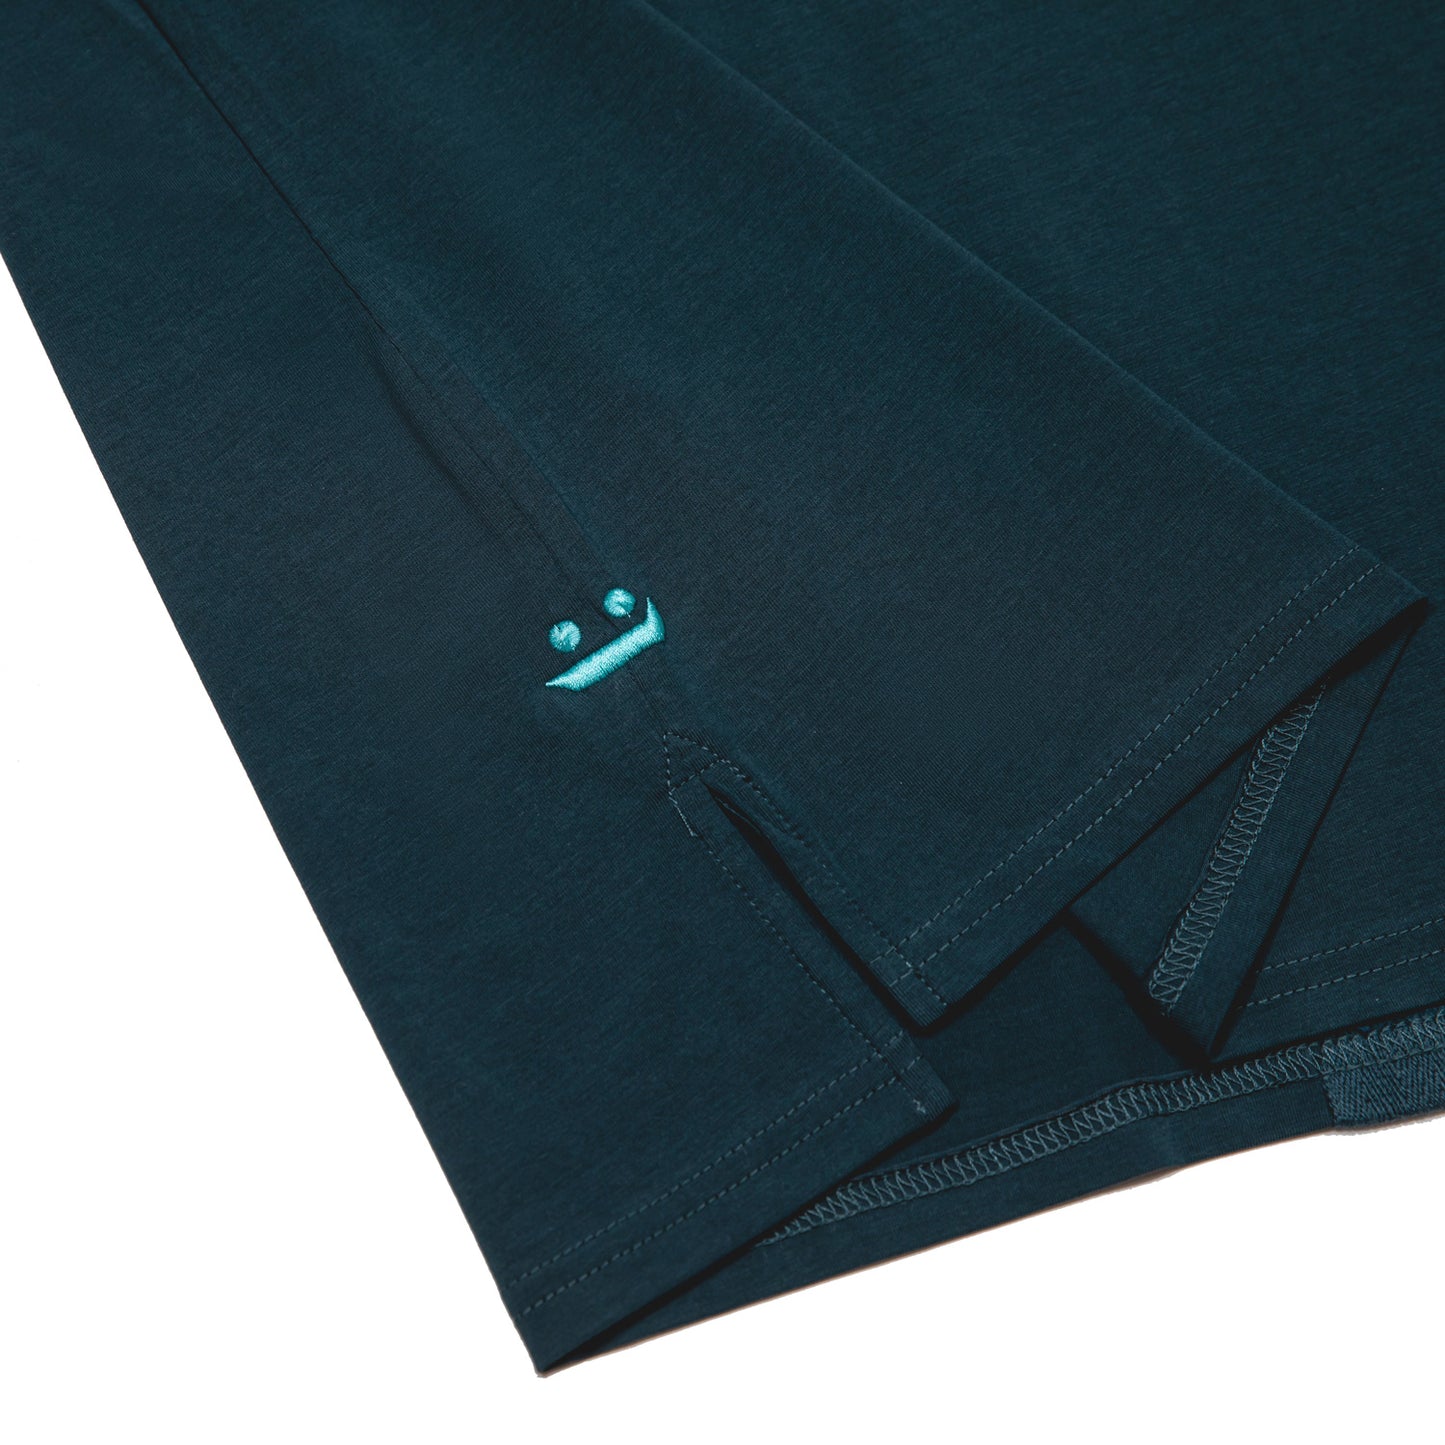 Blue Aegean, T-shirt, shirt, man, plane tee, soft cotton, sleek, detail view, embroidery